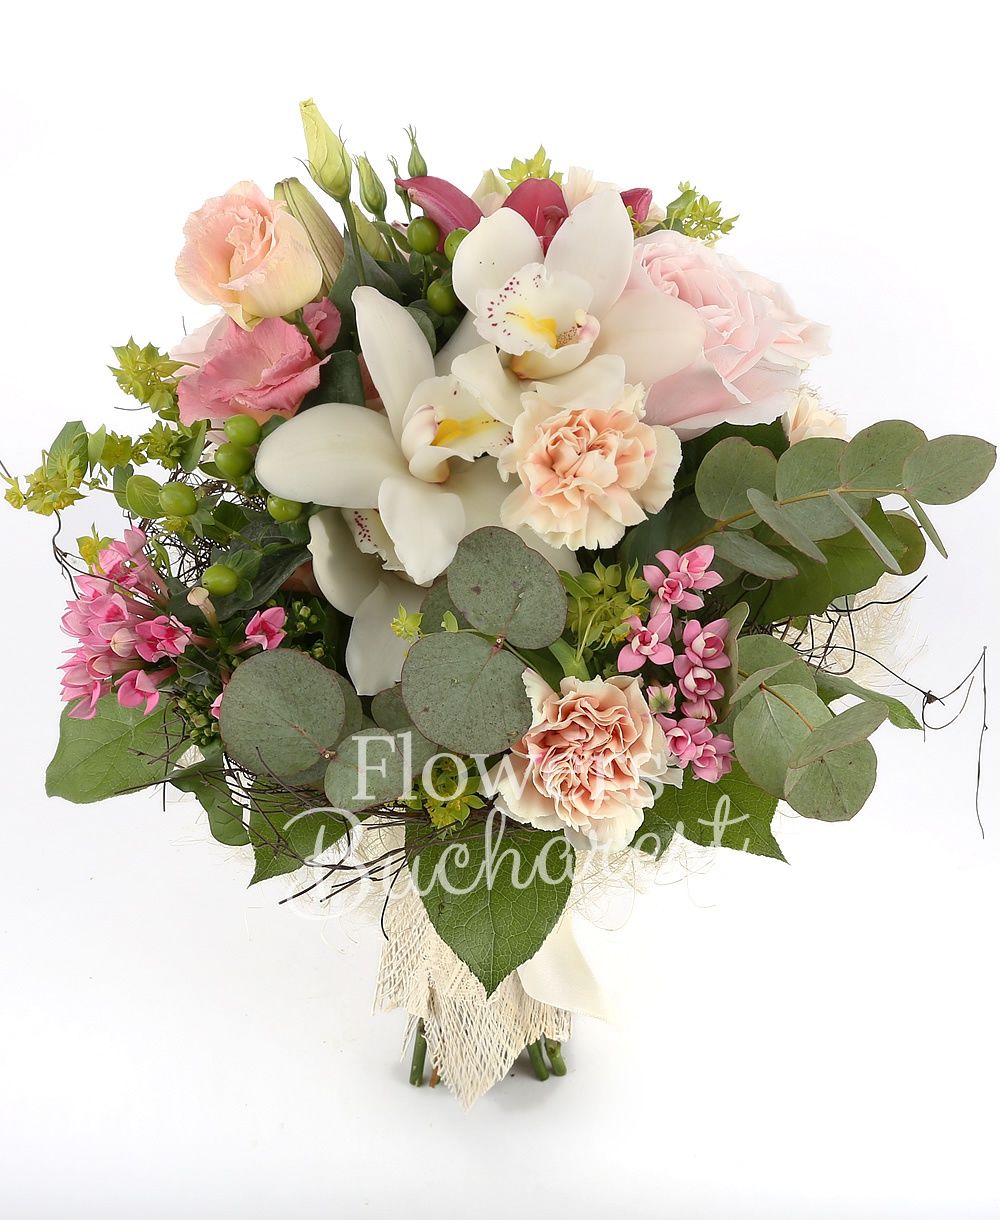 1 pink lily, 5 cream carnations, 5 green hypericum, 3 pink bouvardia, 3 pink roses, 3 pink lisianthus, cymbidium, bupleurum, greenery